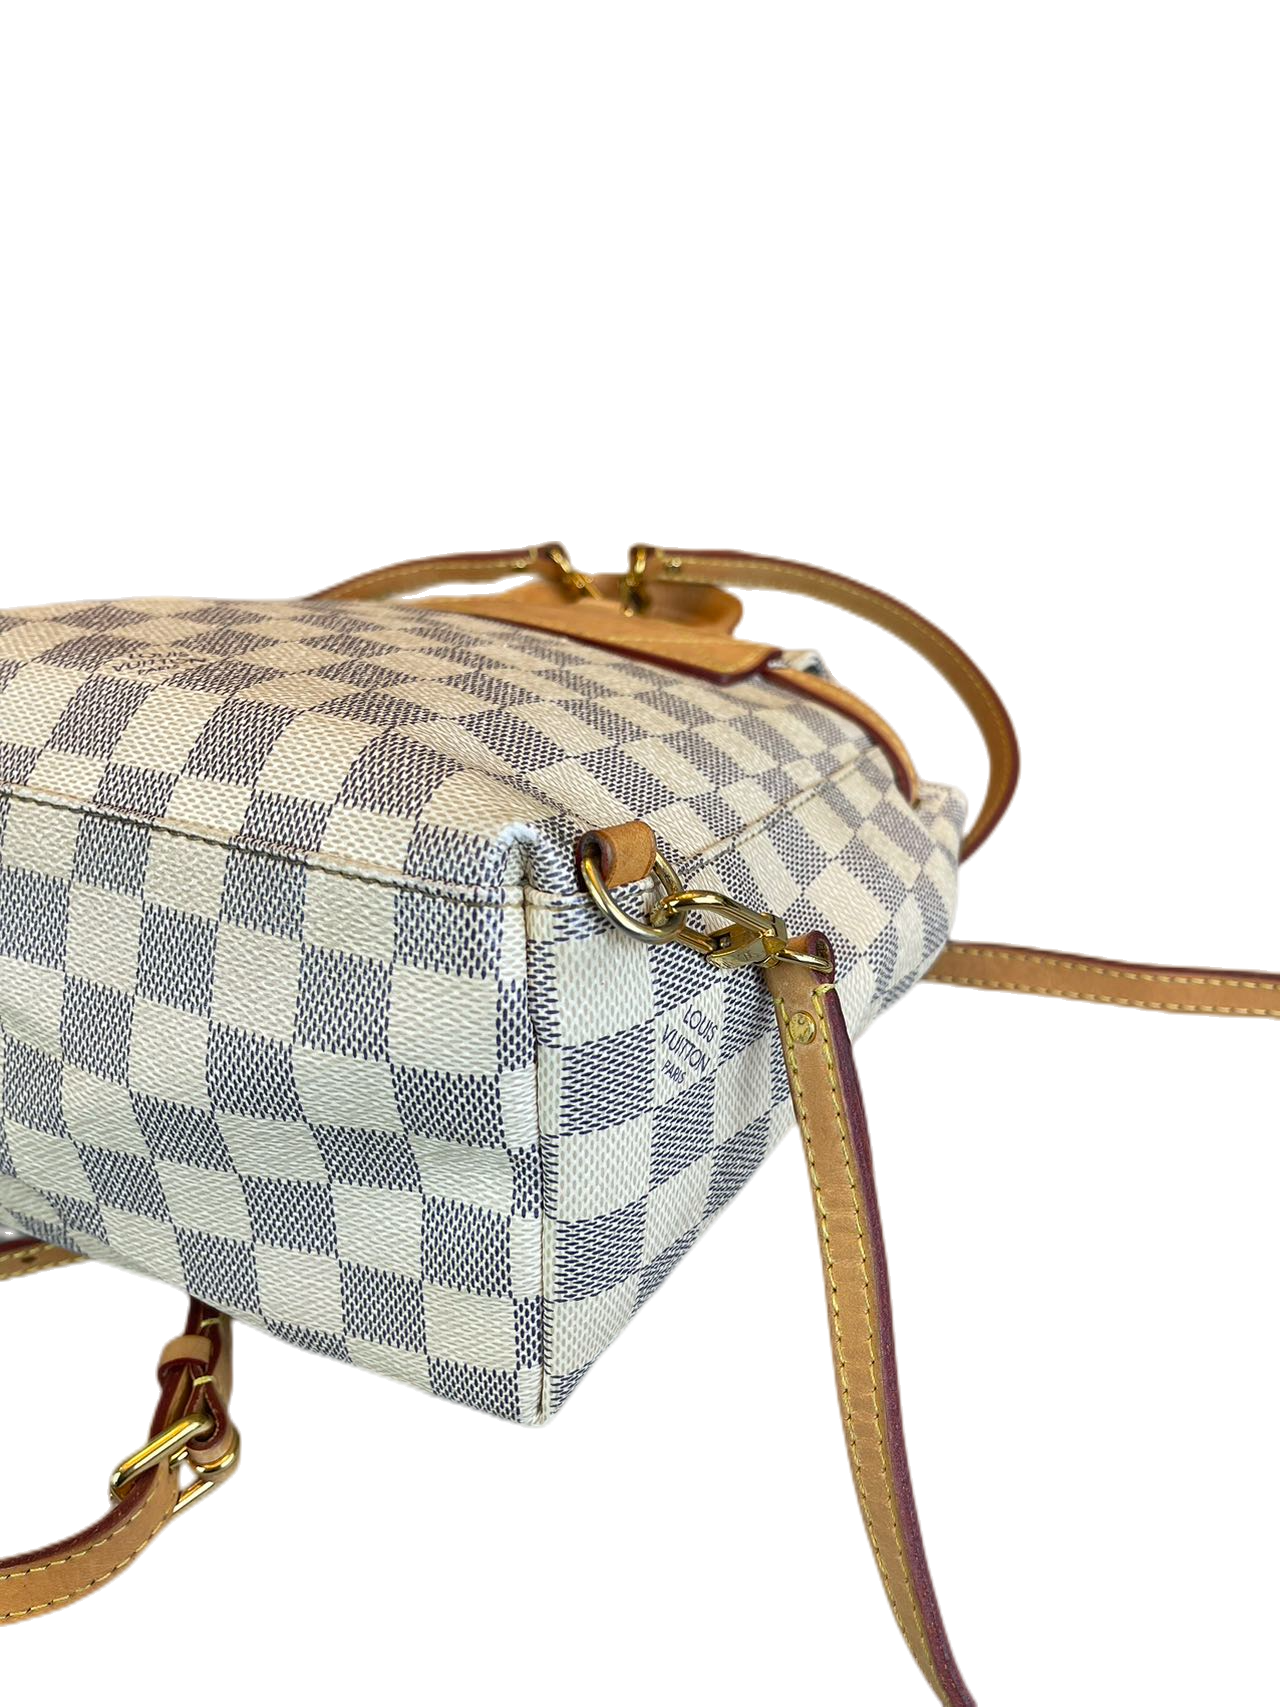 Preloved Louis Vuitton Damier Azur Sperone Backpack